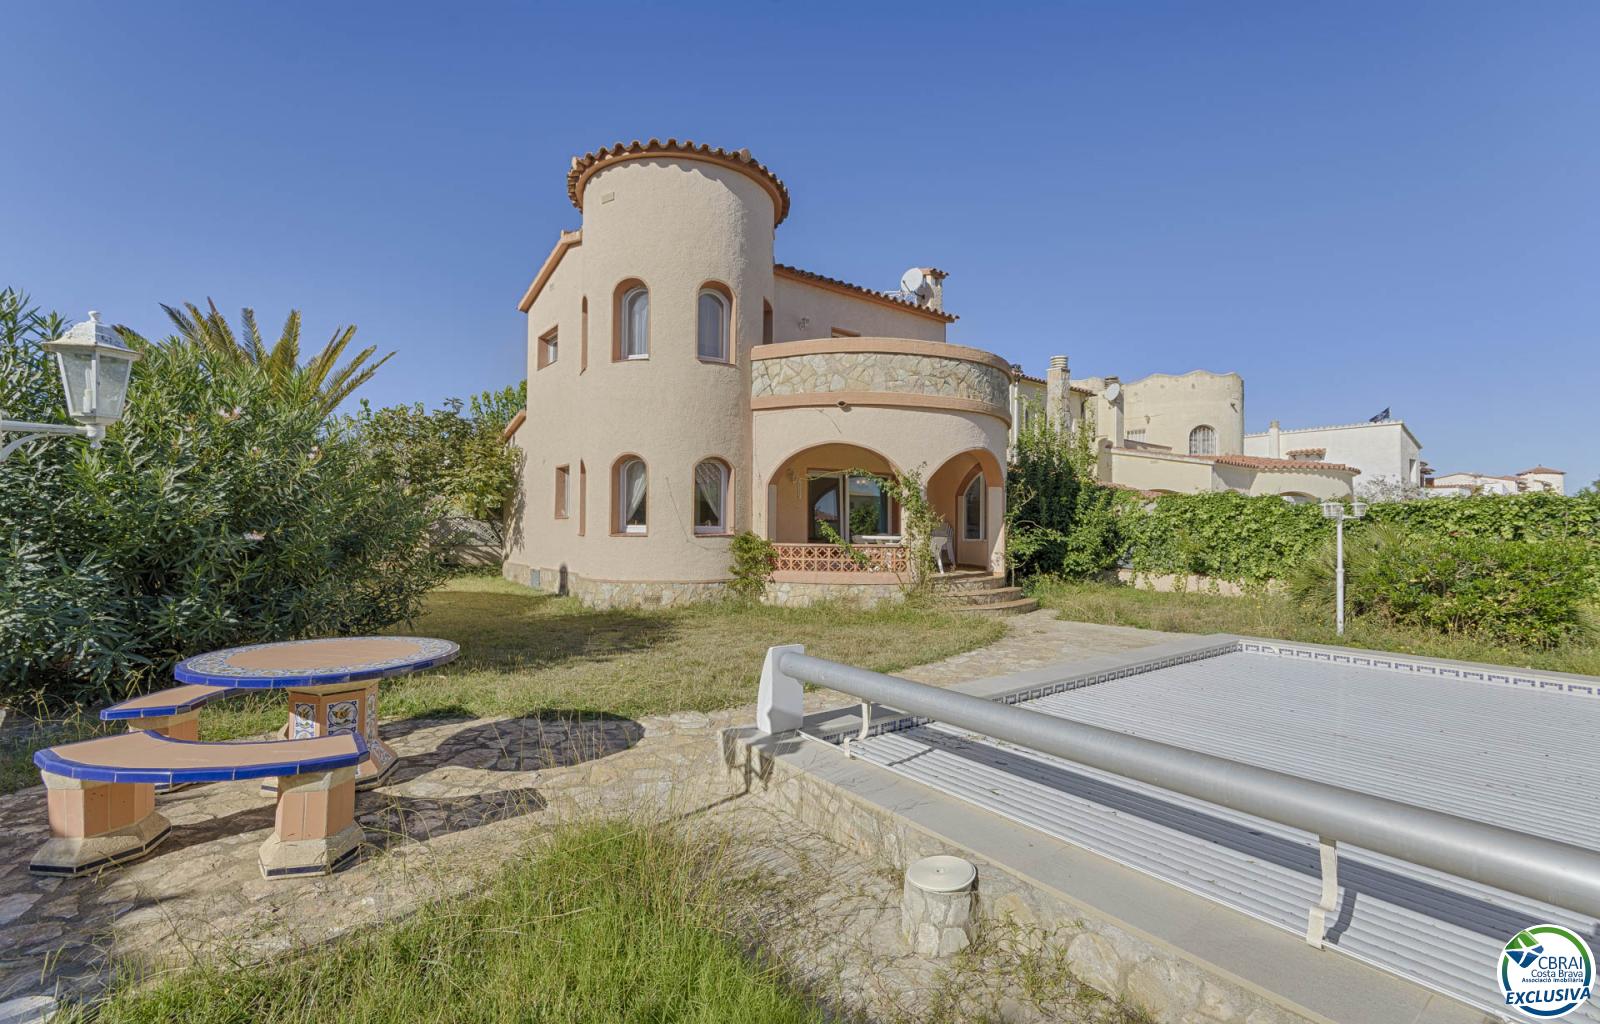 🏡 Exclusiva Casa en Urbanización Ànfora de Sant Pere Pescador 🌅